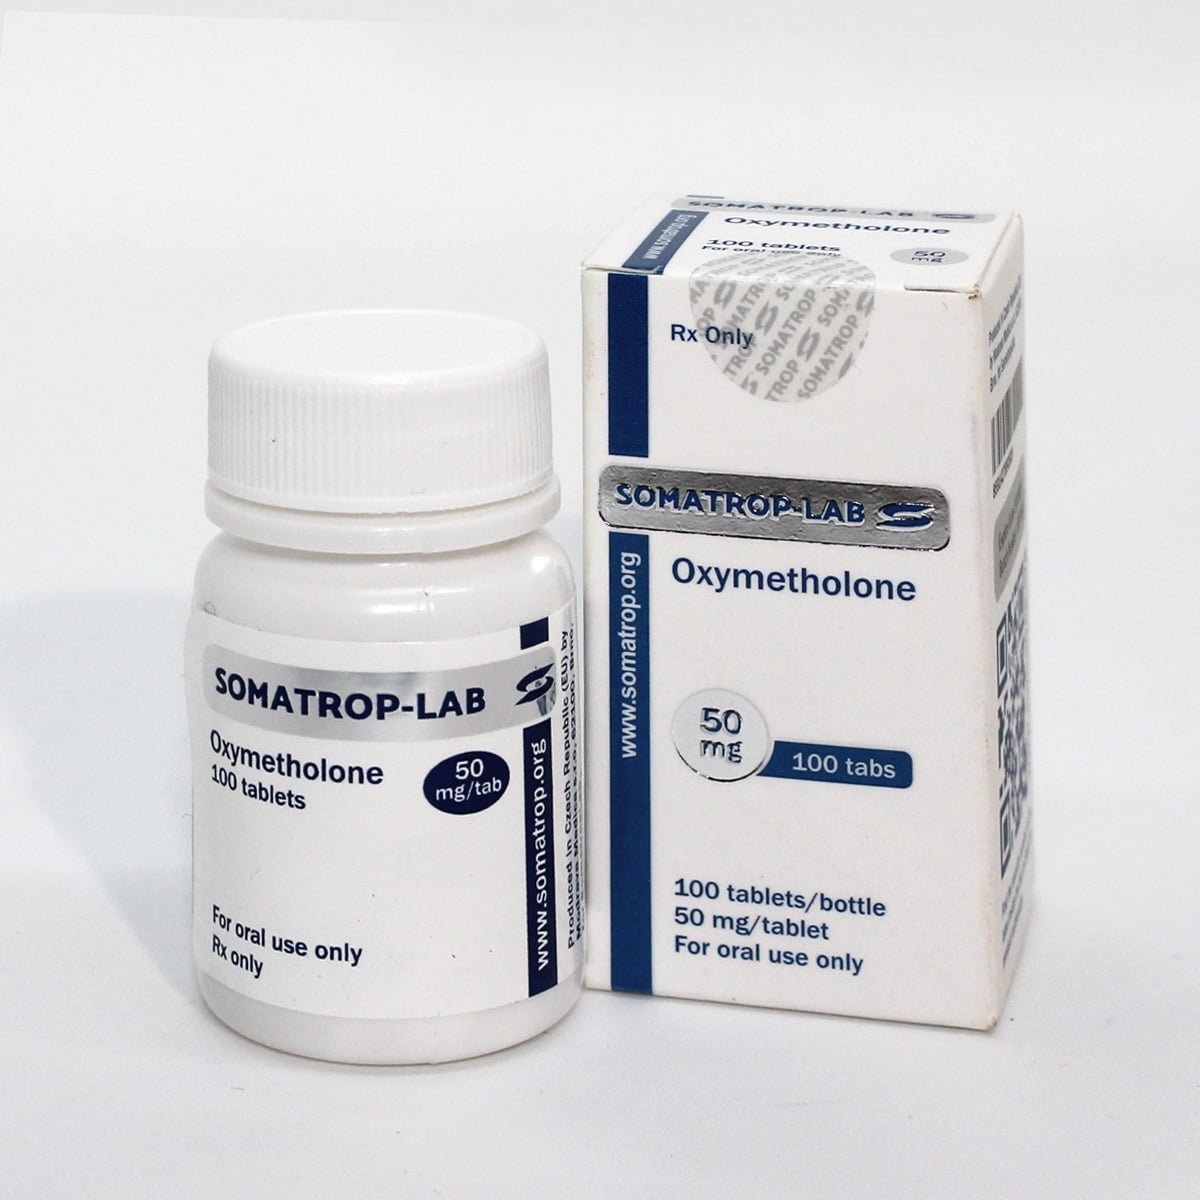 Somatrop-Lab Oxymetholone 50